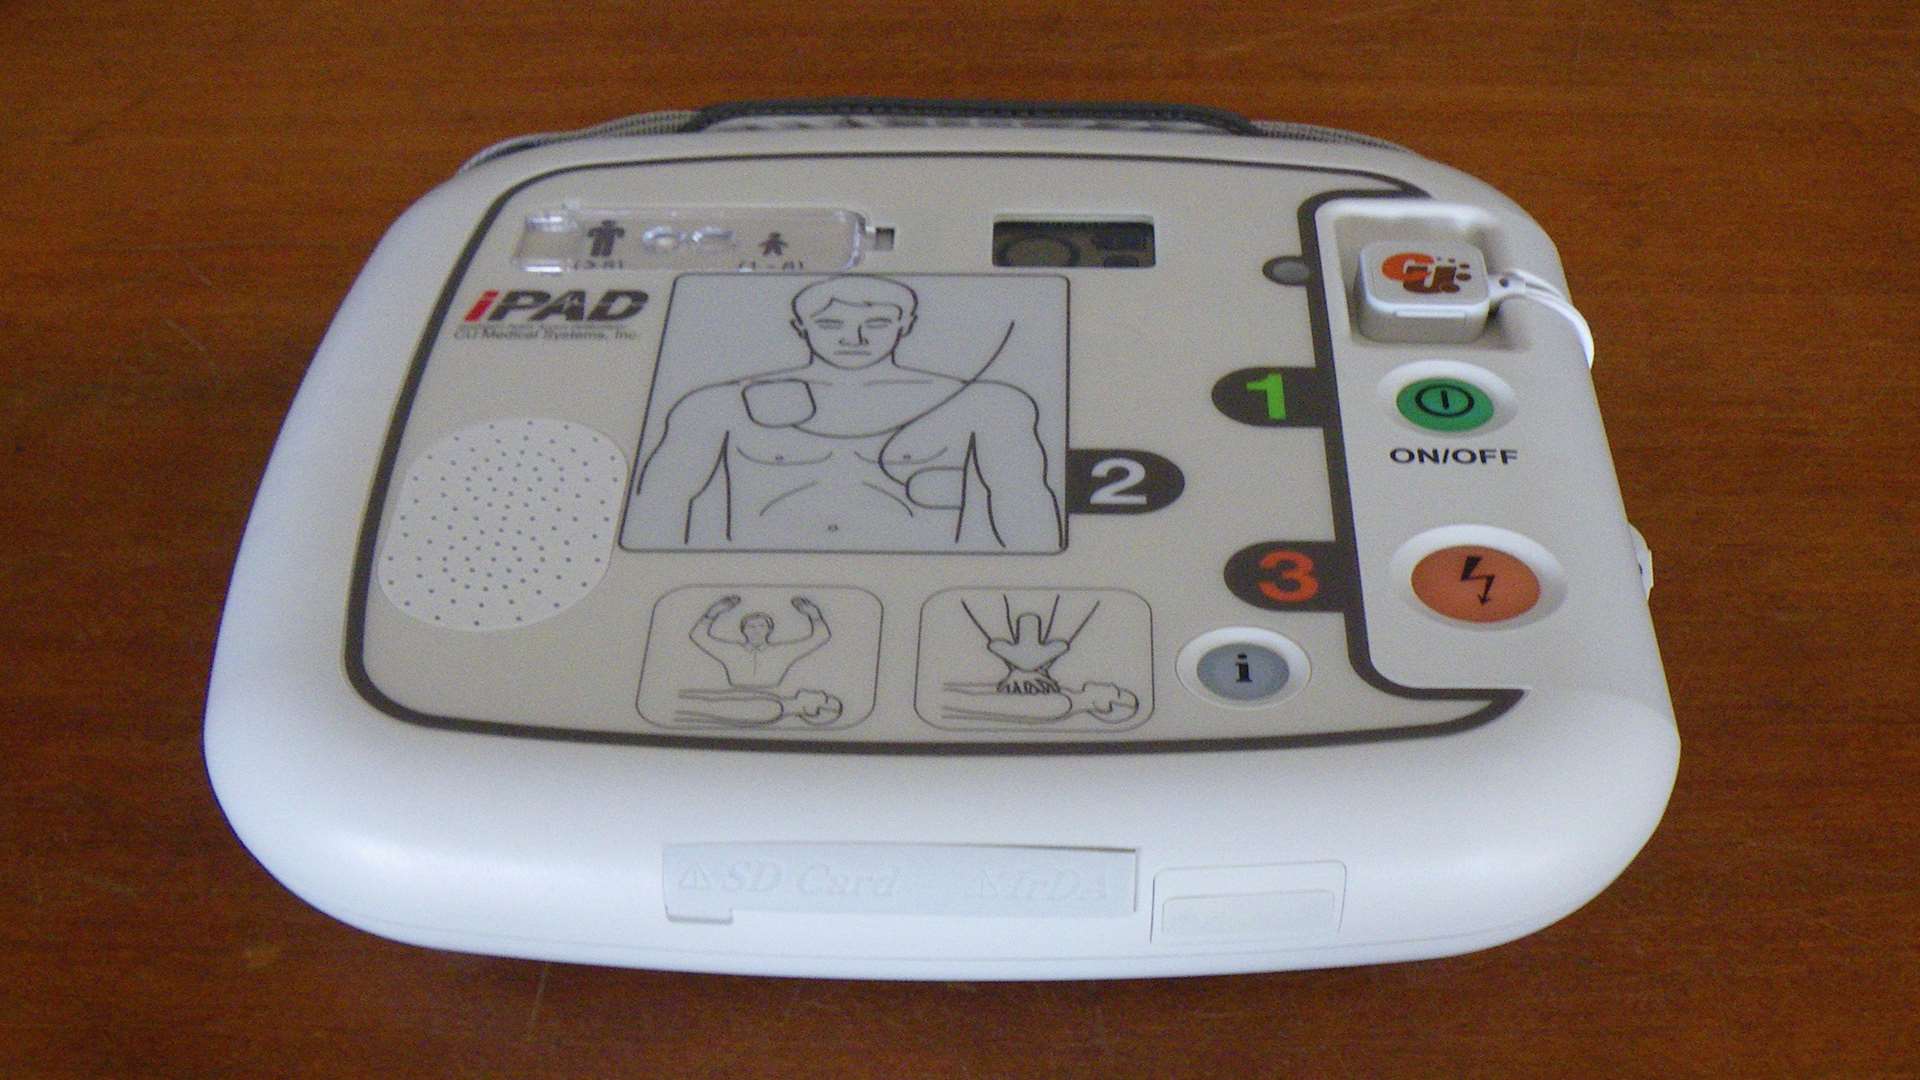 The £1,400 defibrillator